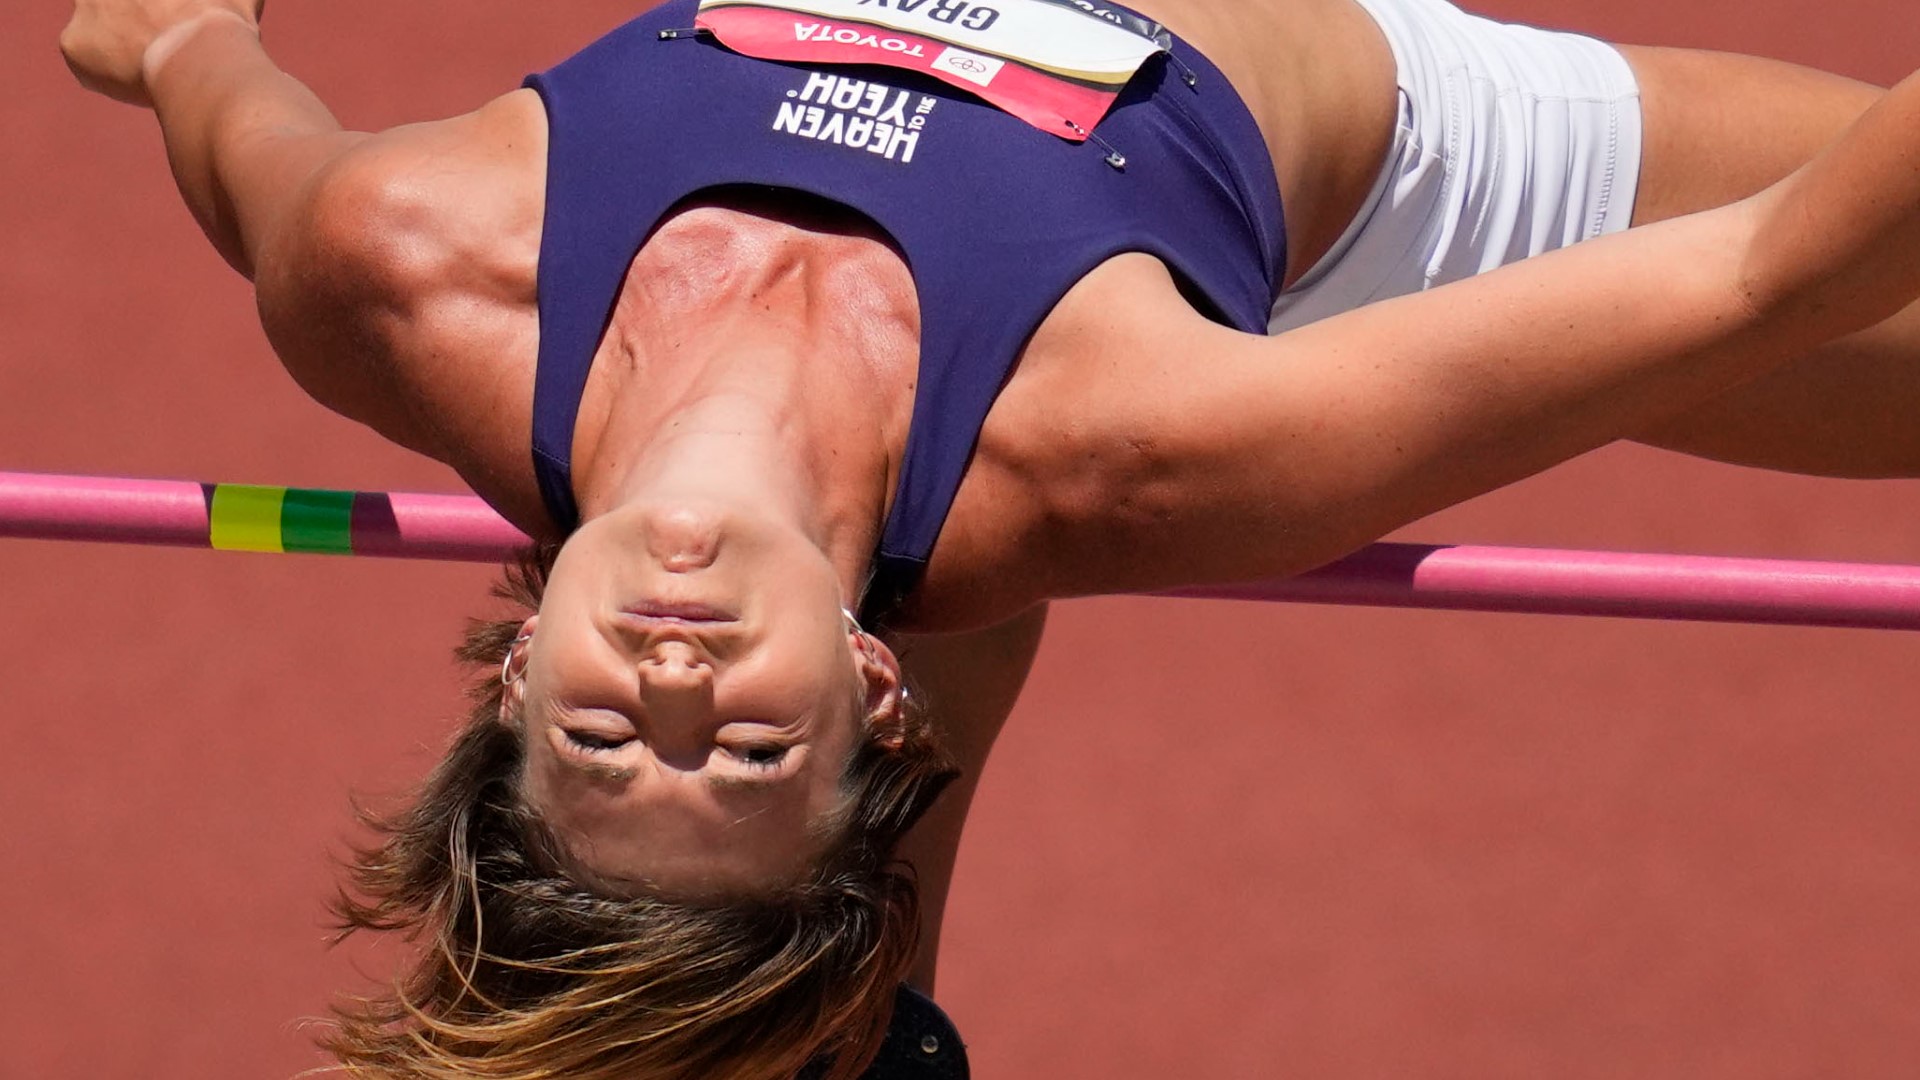 Athlete champions for women's decathlon in Olympics, Jordan Gray